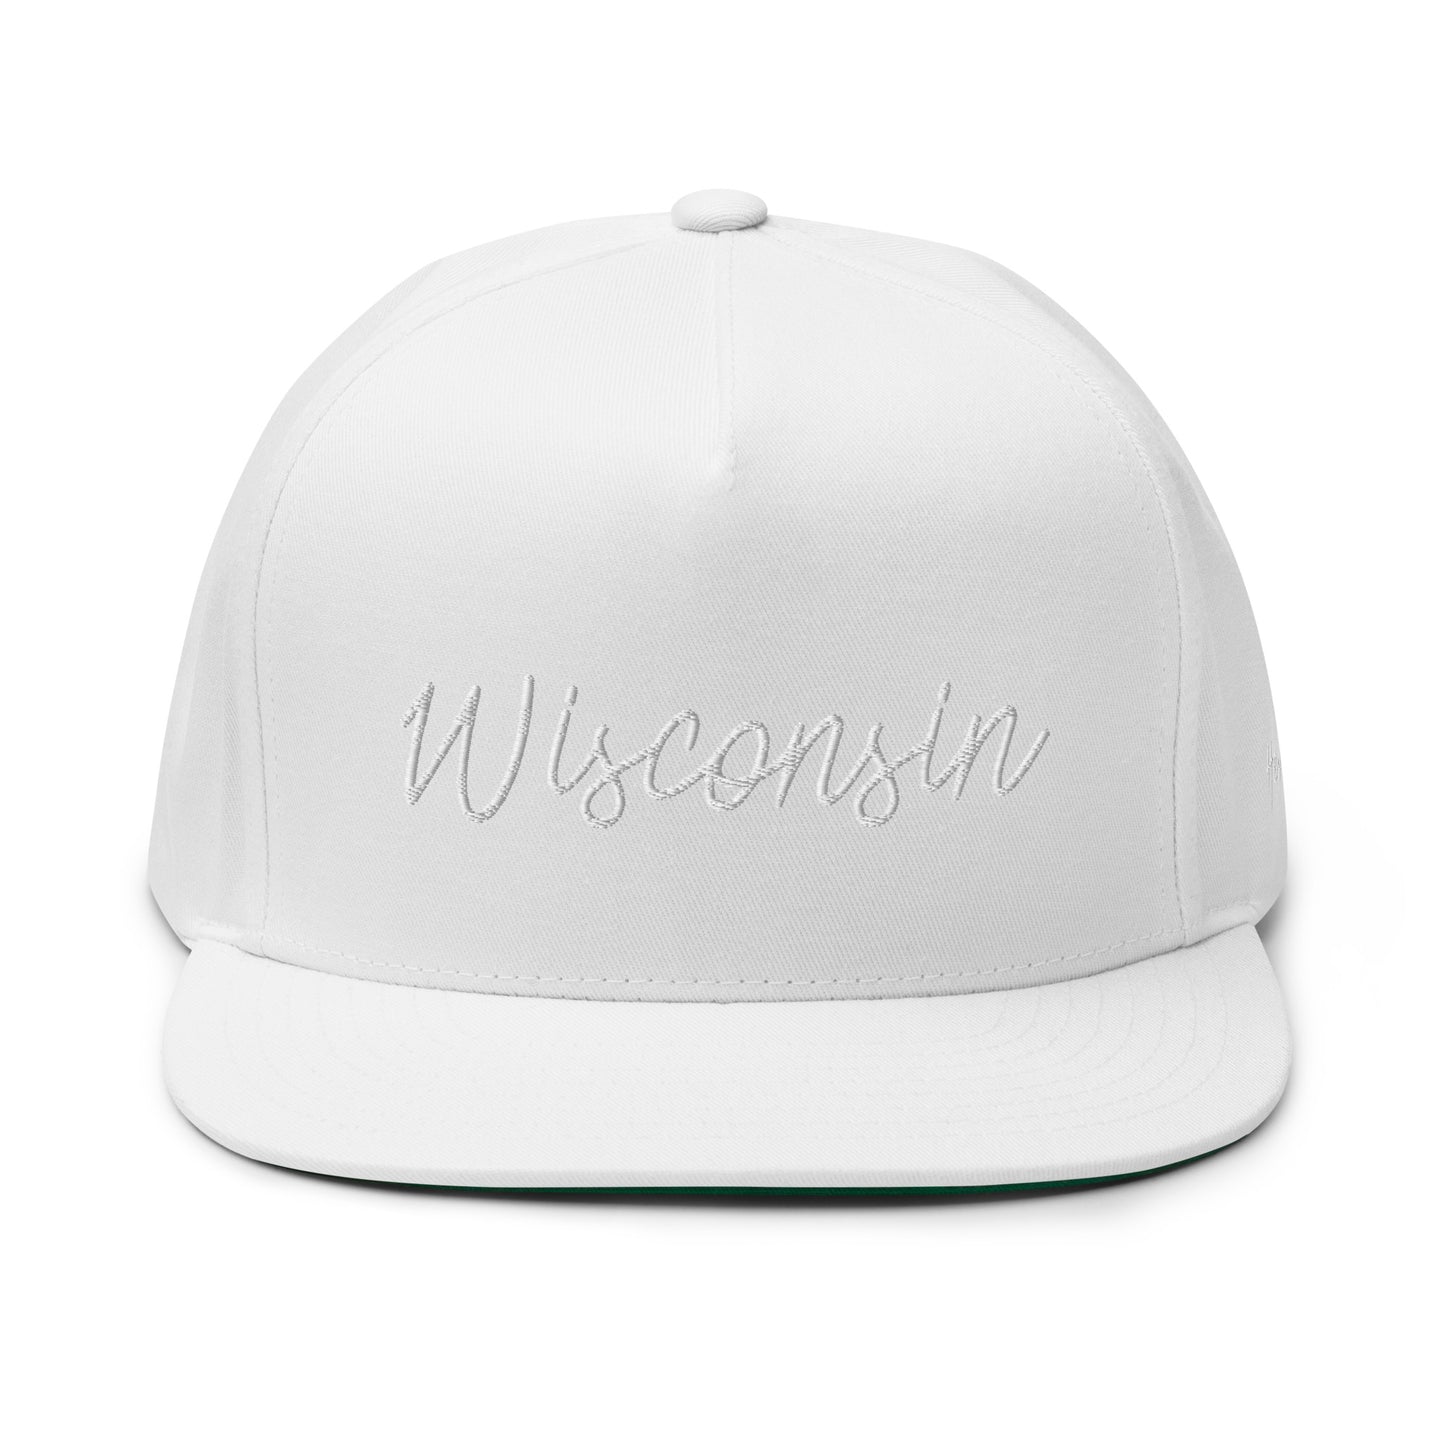 Wisconsin Retro Script 5 Panel A-Frame Snapback Hat